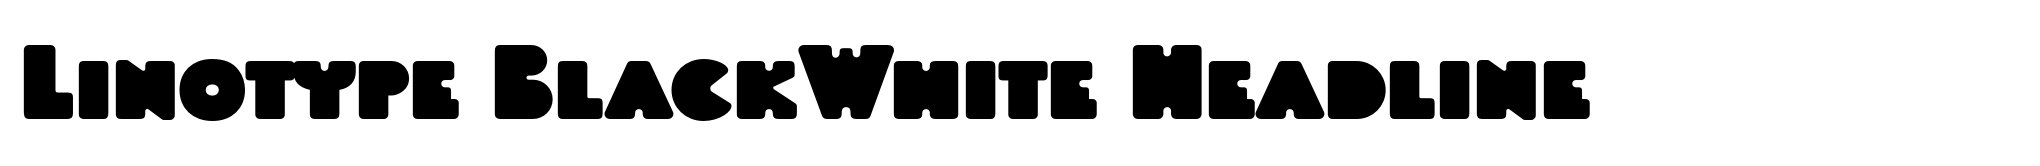 Linotype BlackWhite Headline image